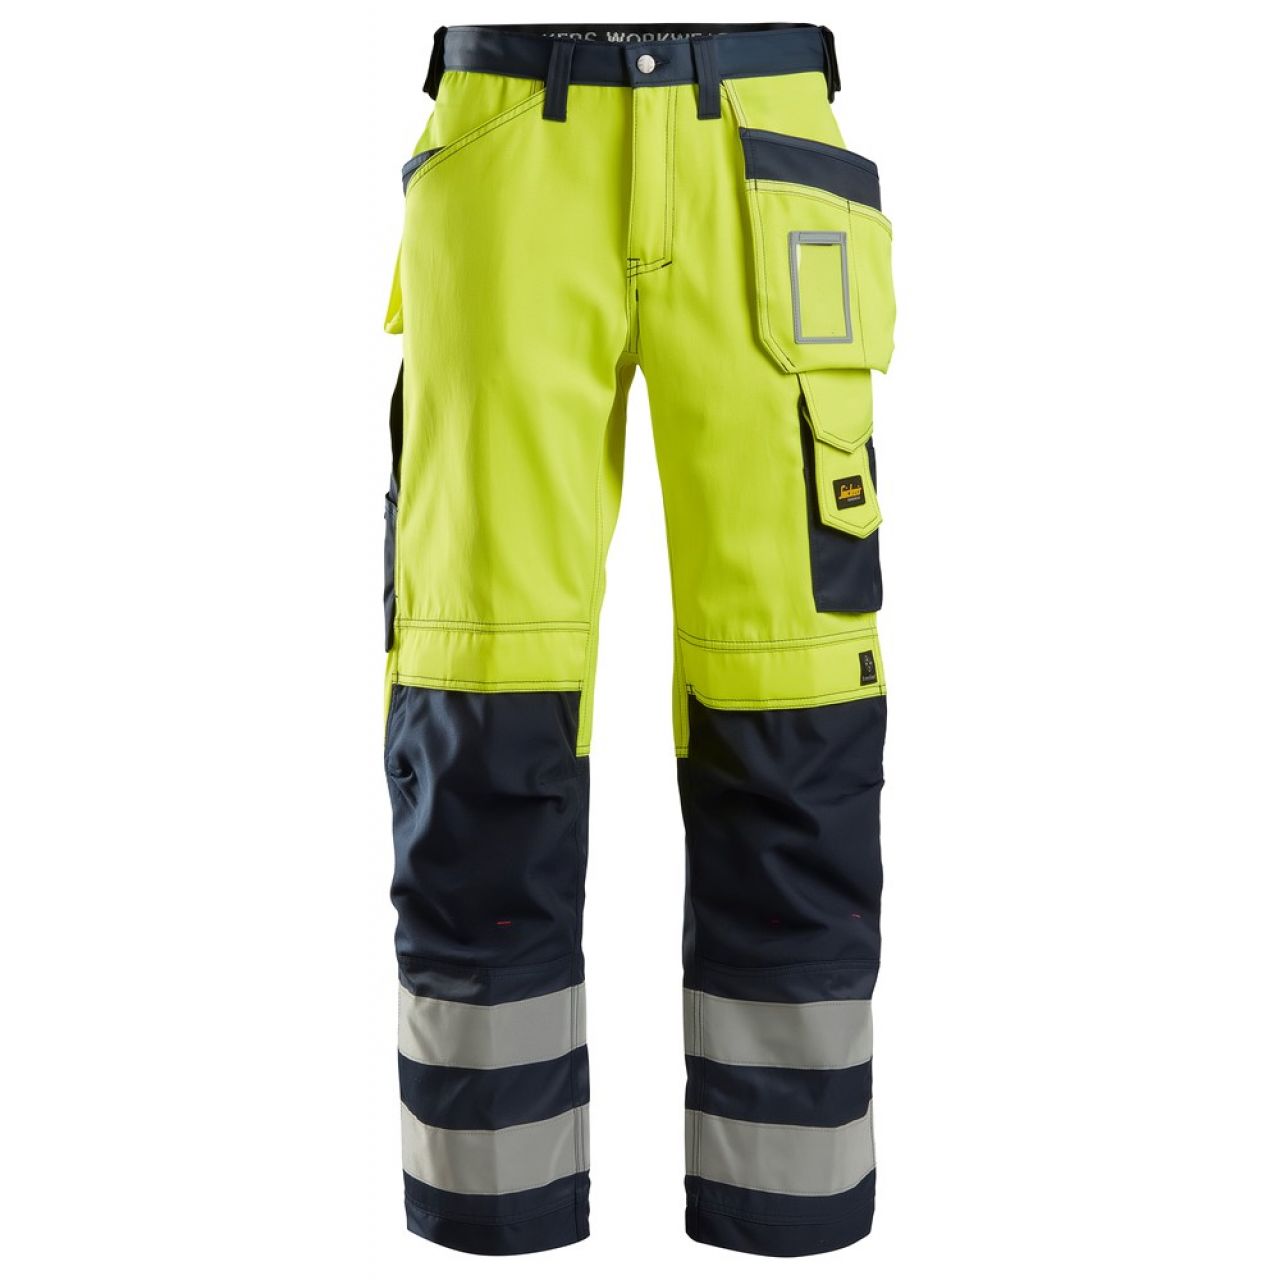 3233 Pantalones largos de trabajo de alta visibilidad clase 2 con bolsillos flotantes amarillo-azul marino talla 148